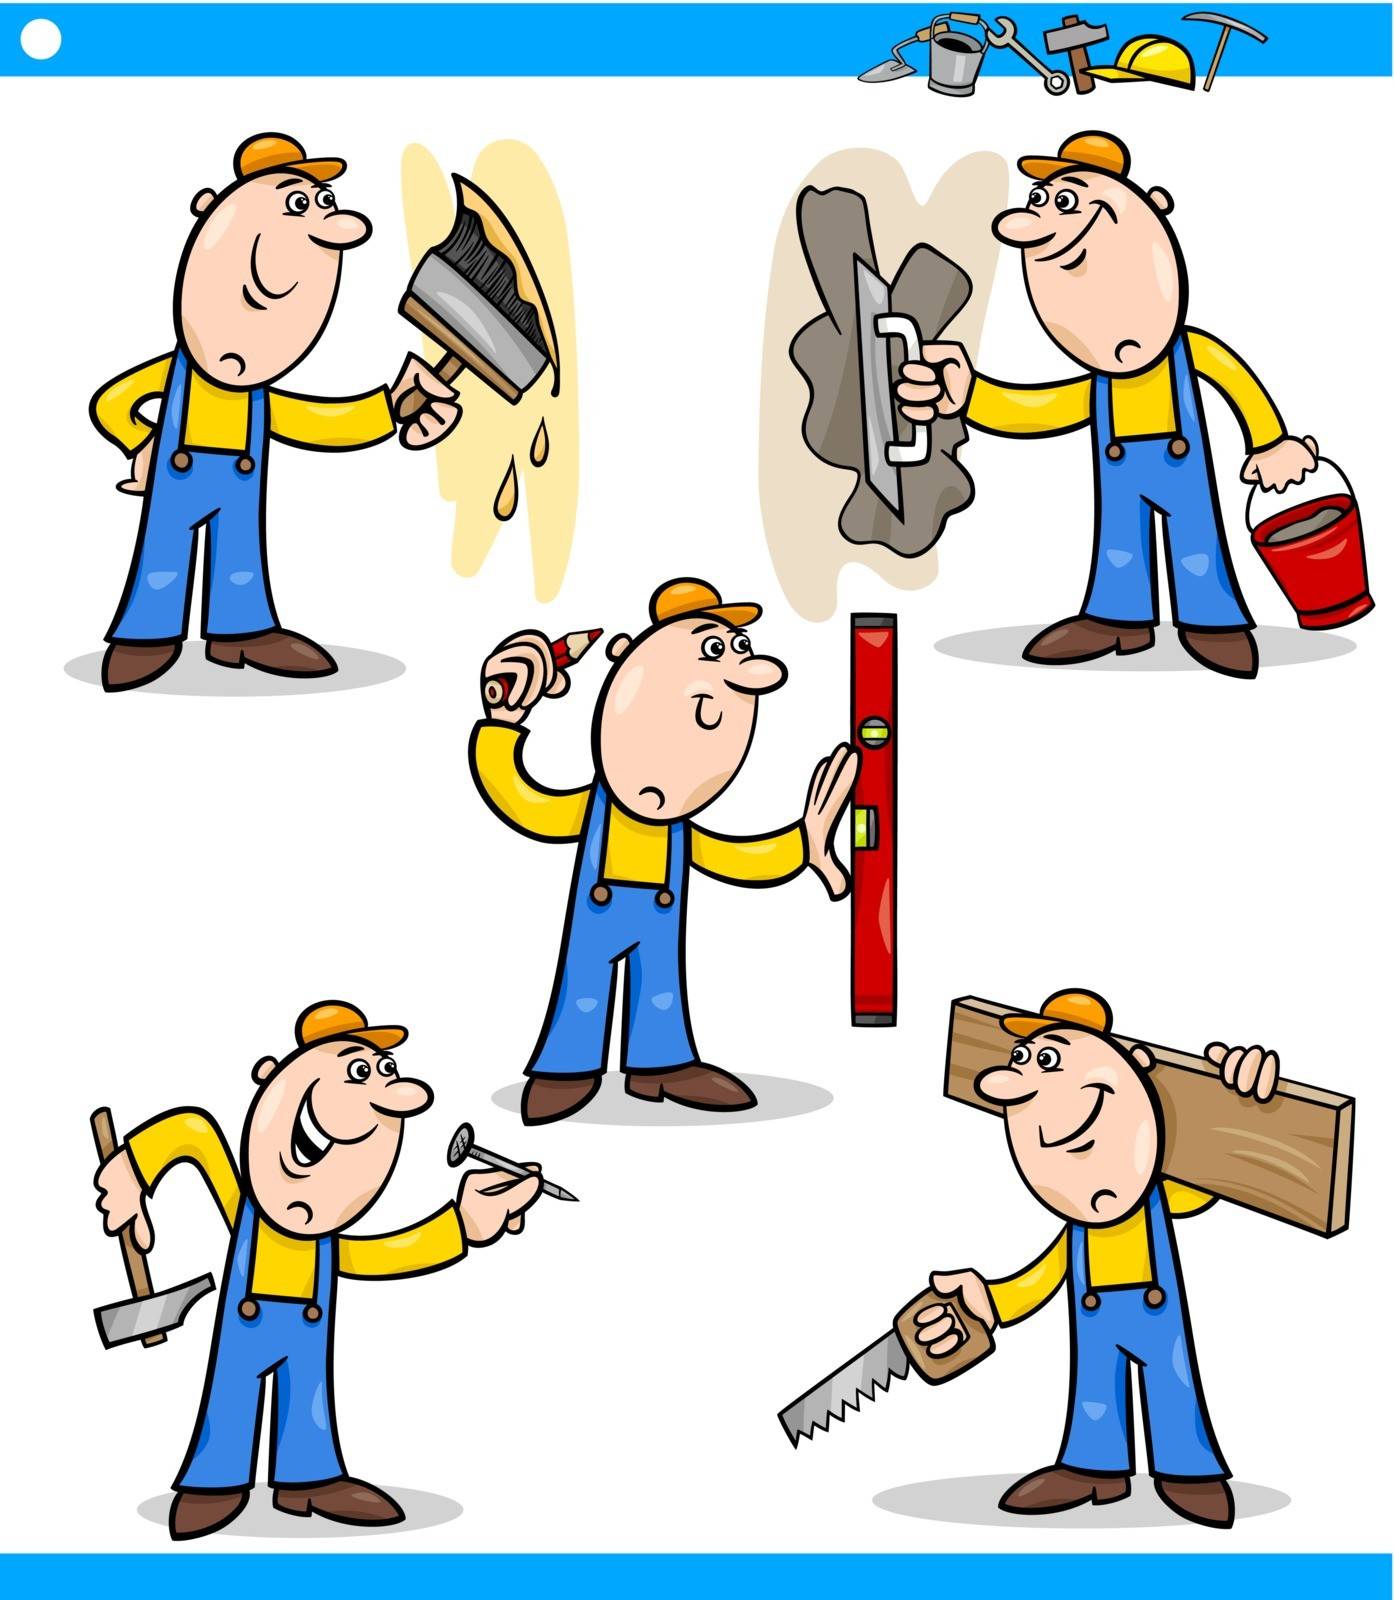 manual workers or workmen characters set by izakowski